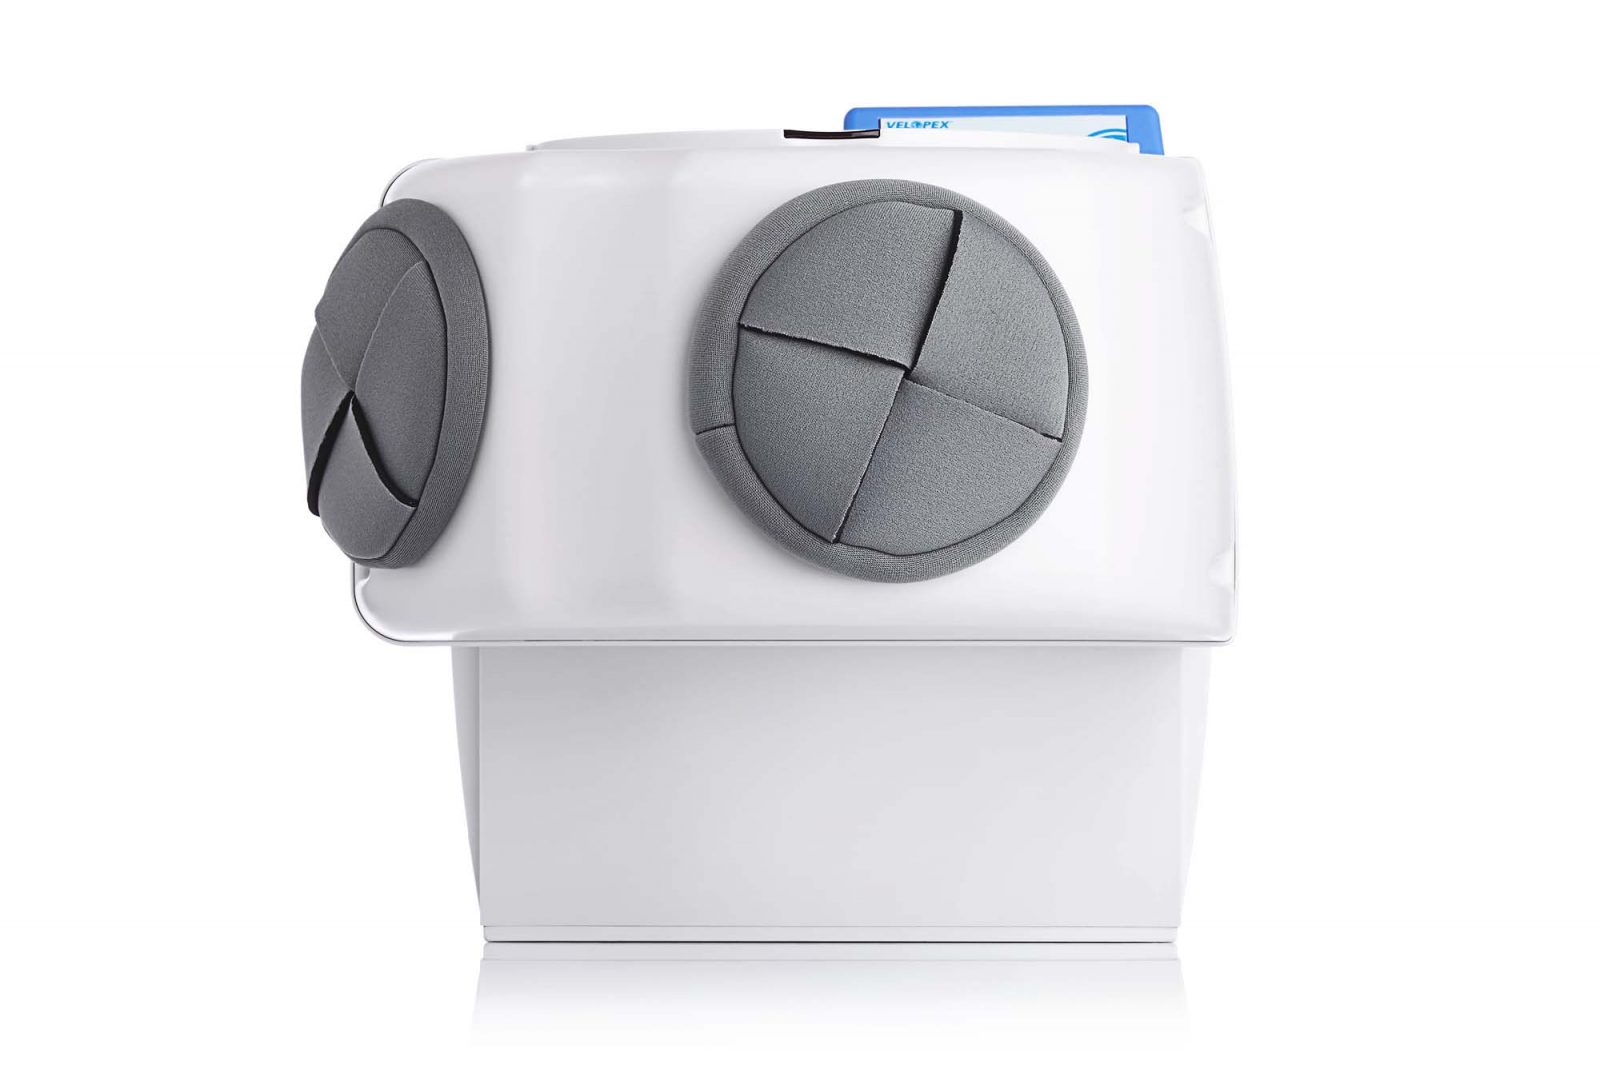 Velopex Intra X -Automatic Dental X-Ray Film Processor